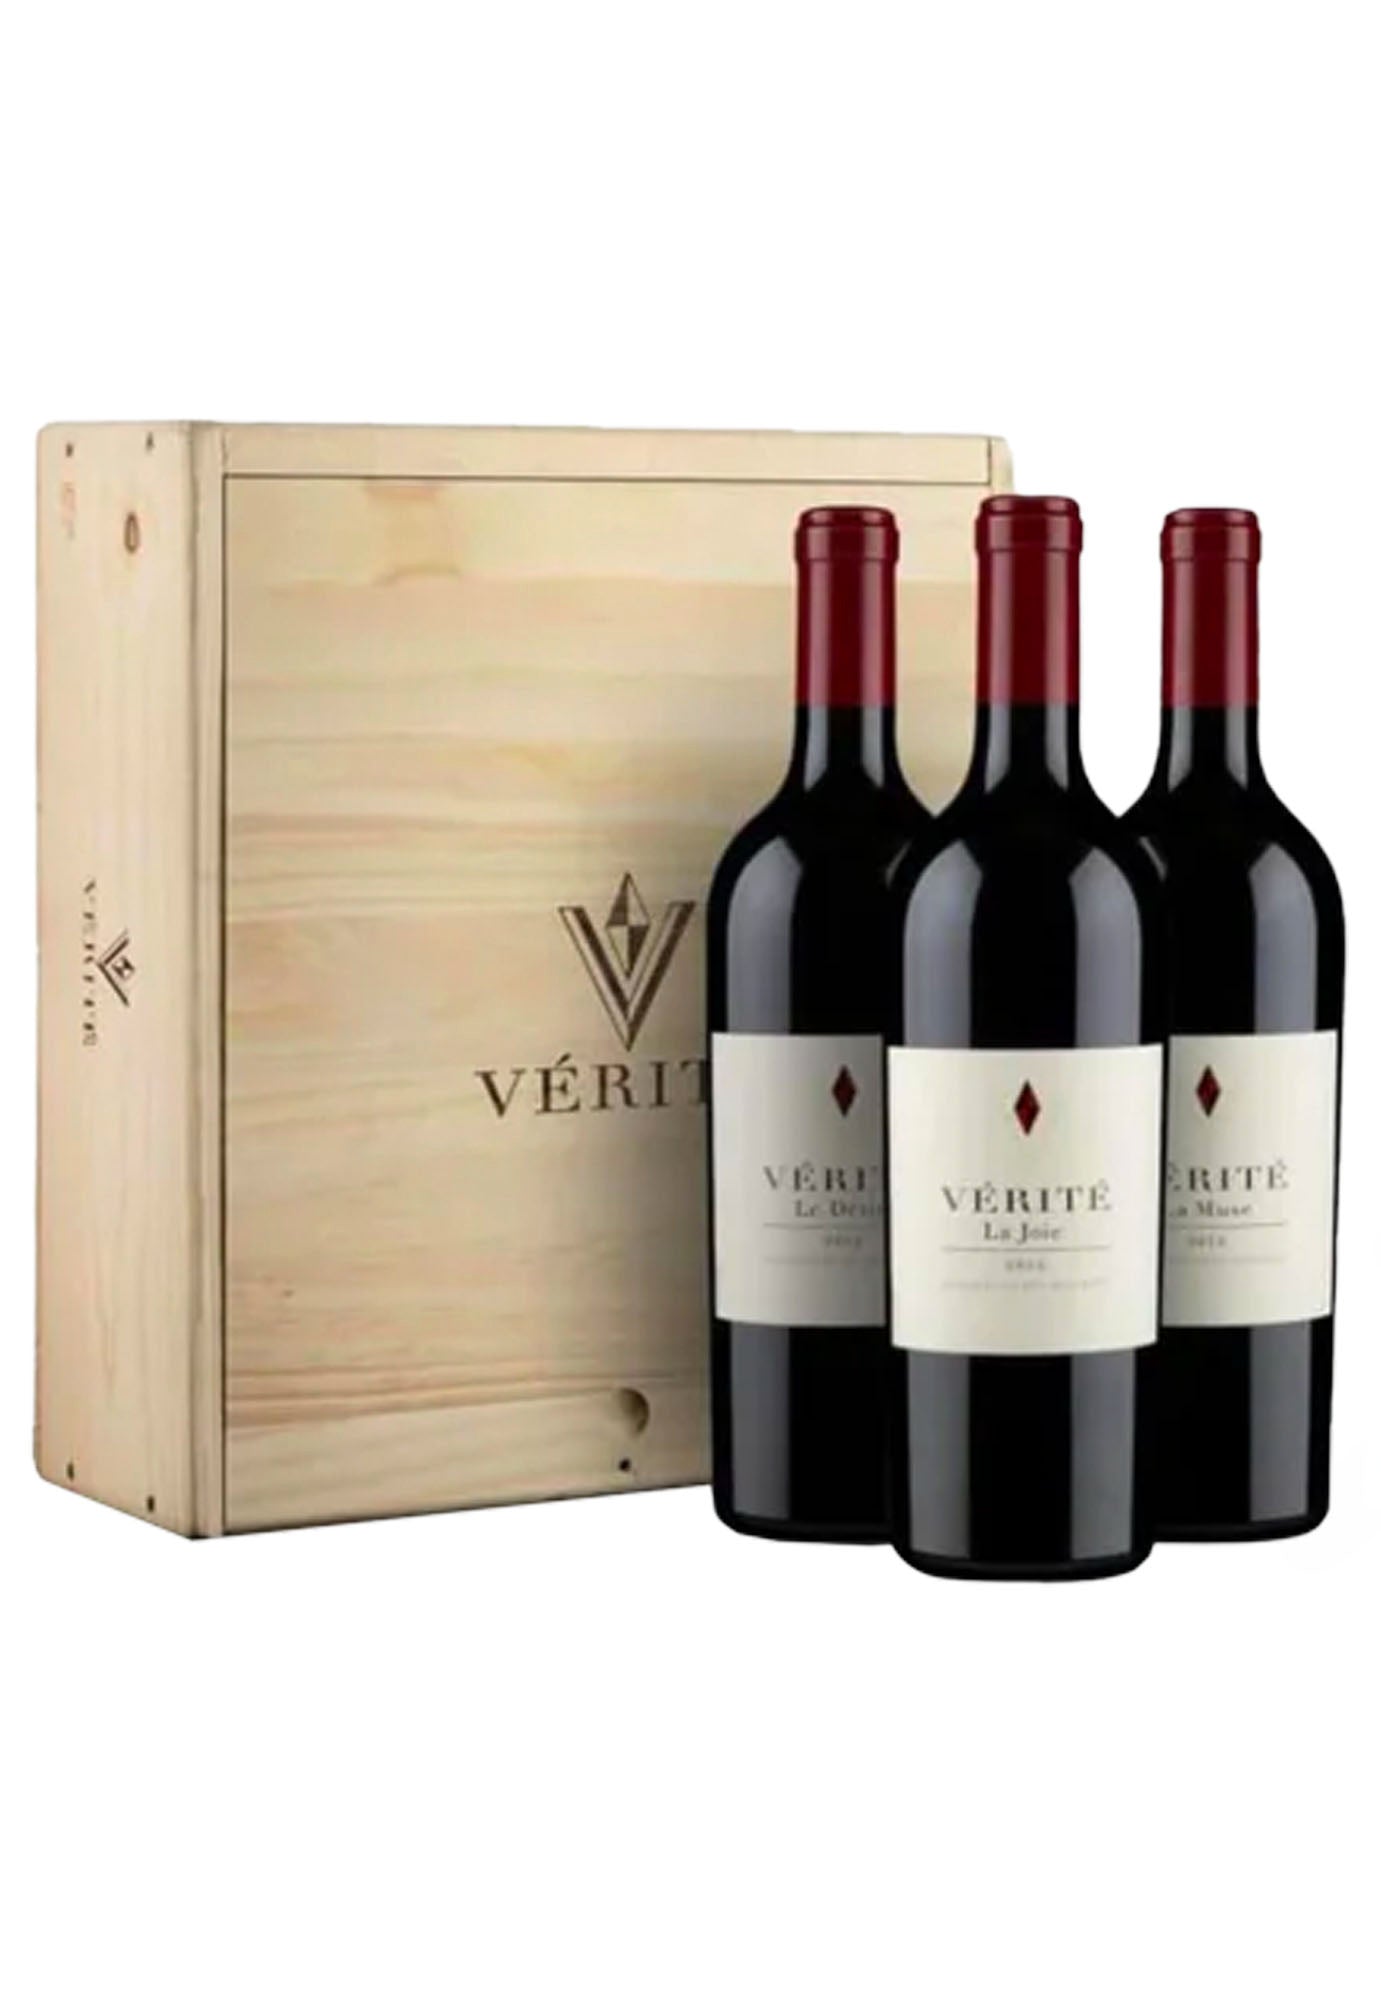 Verite 2019 - 3 Bottle Mixed Pack